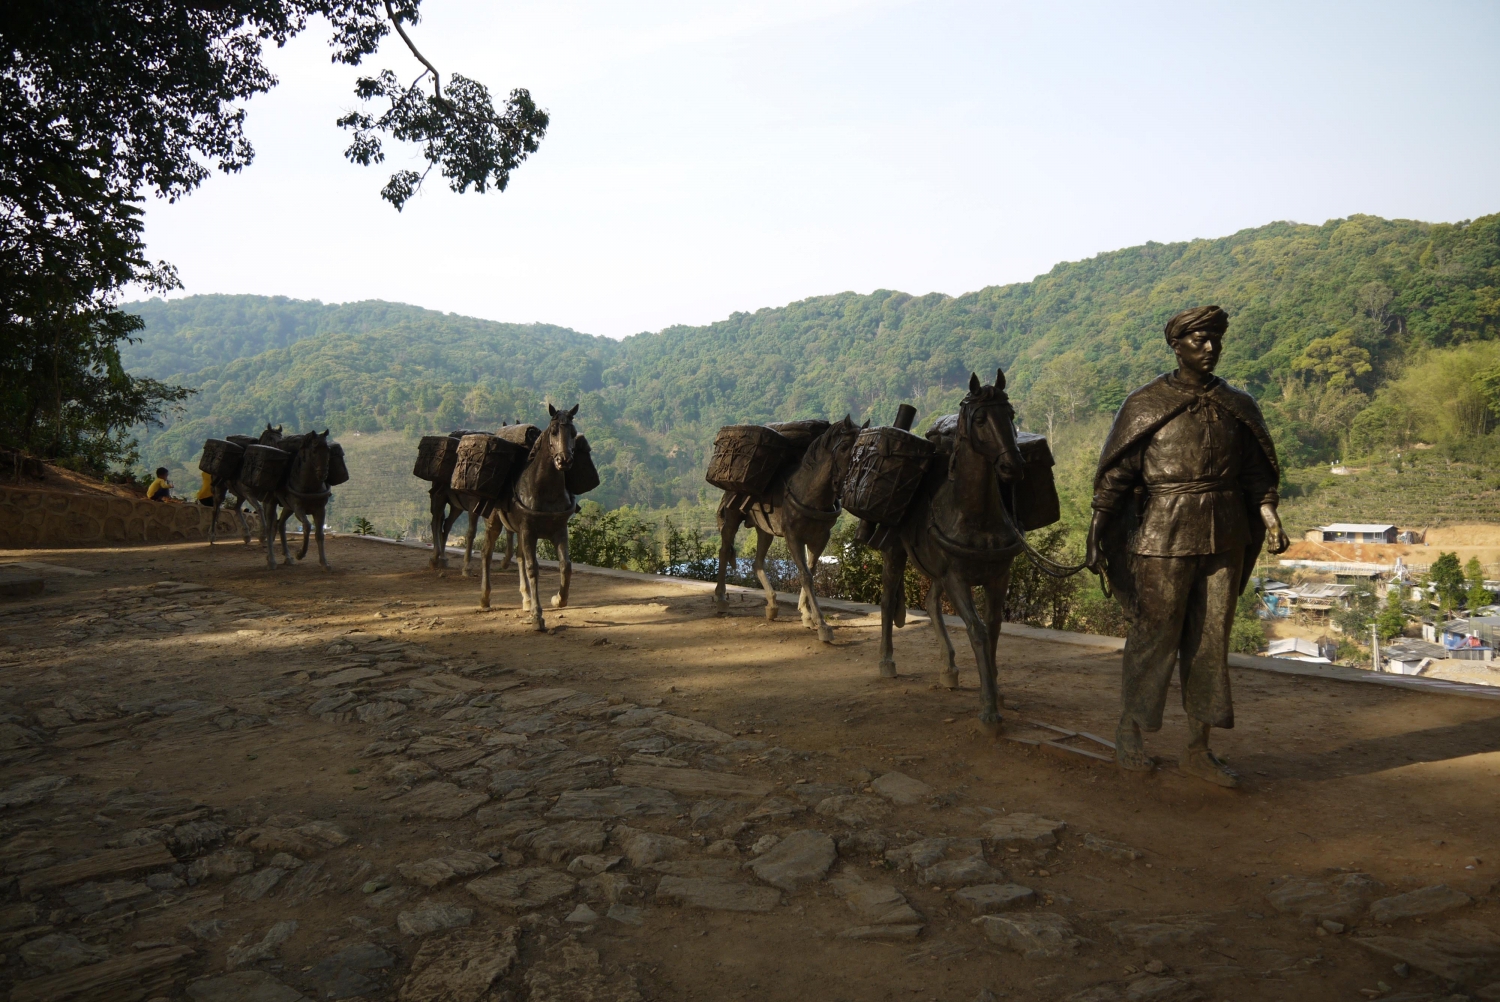 Bronze Horses and tea merchant on Tea Horse Road, Yiwu